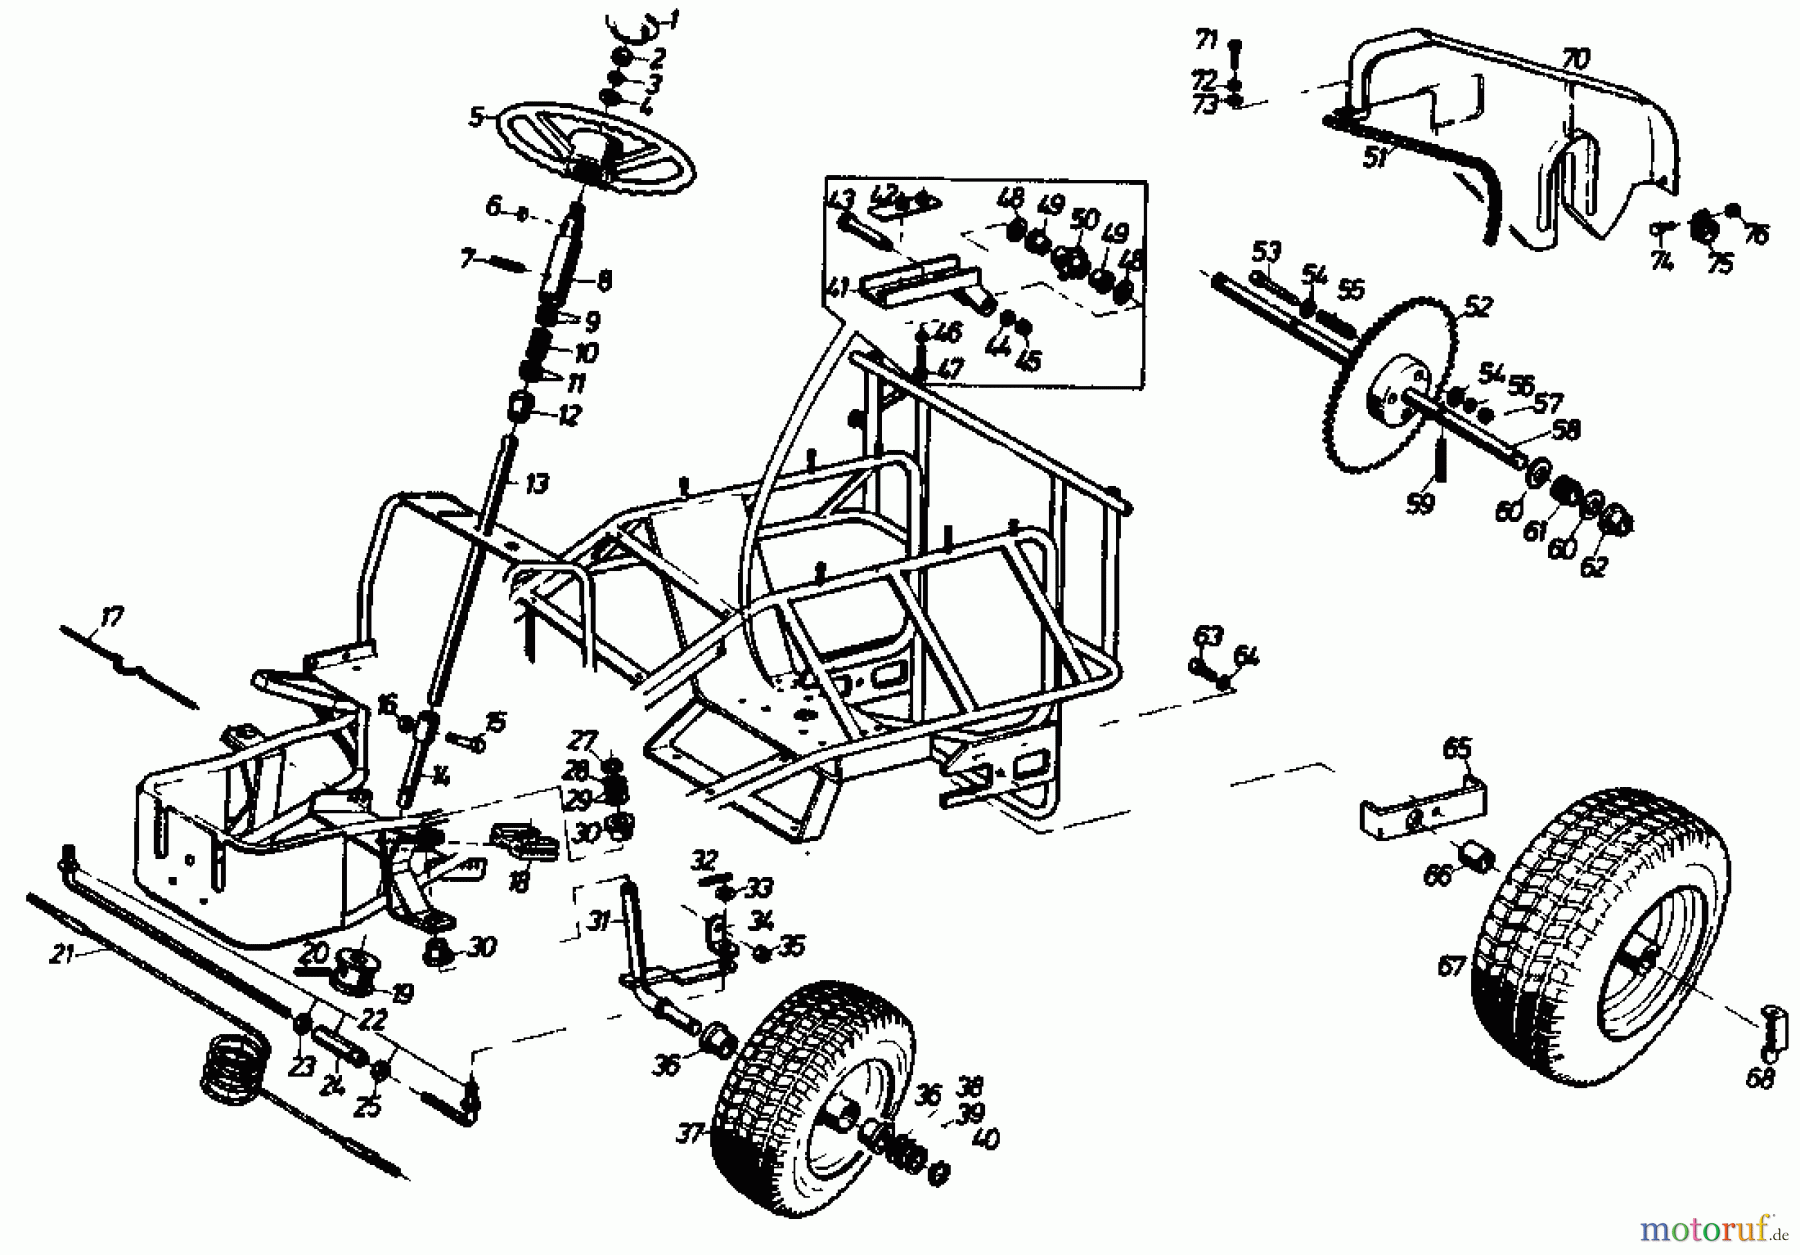  Gutbrod Lawn tractors Sprint 1000 E 02840.04  (1989) Drive system, Steering wheel, Steering, Wheels